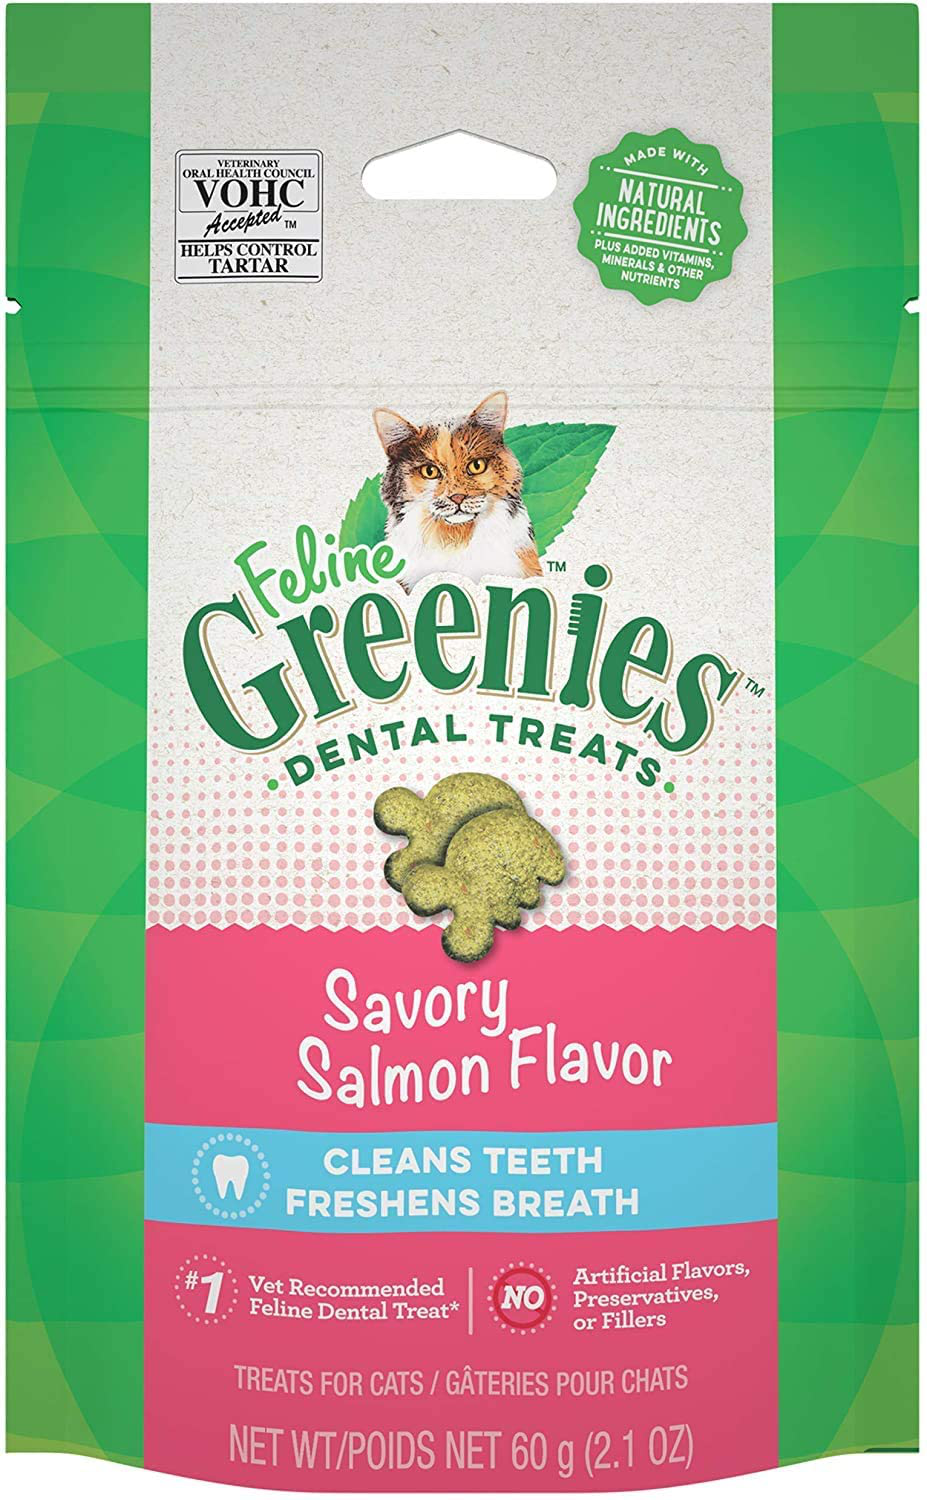 Greenies (4 Pack) Feline Dental Cat Treat Variety Bundle 4 Flavors - 2.1Oz Each Bag, (1) Tempting Tuna, (1) Savory Salmon, (1) Oven Roasted Chicken, and (1) Catnip Flavor 10Ct Pet Wipes Animals & Pet Supplies > Pet Supplies > Cat Supplies > Cat Treats Greenies   